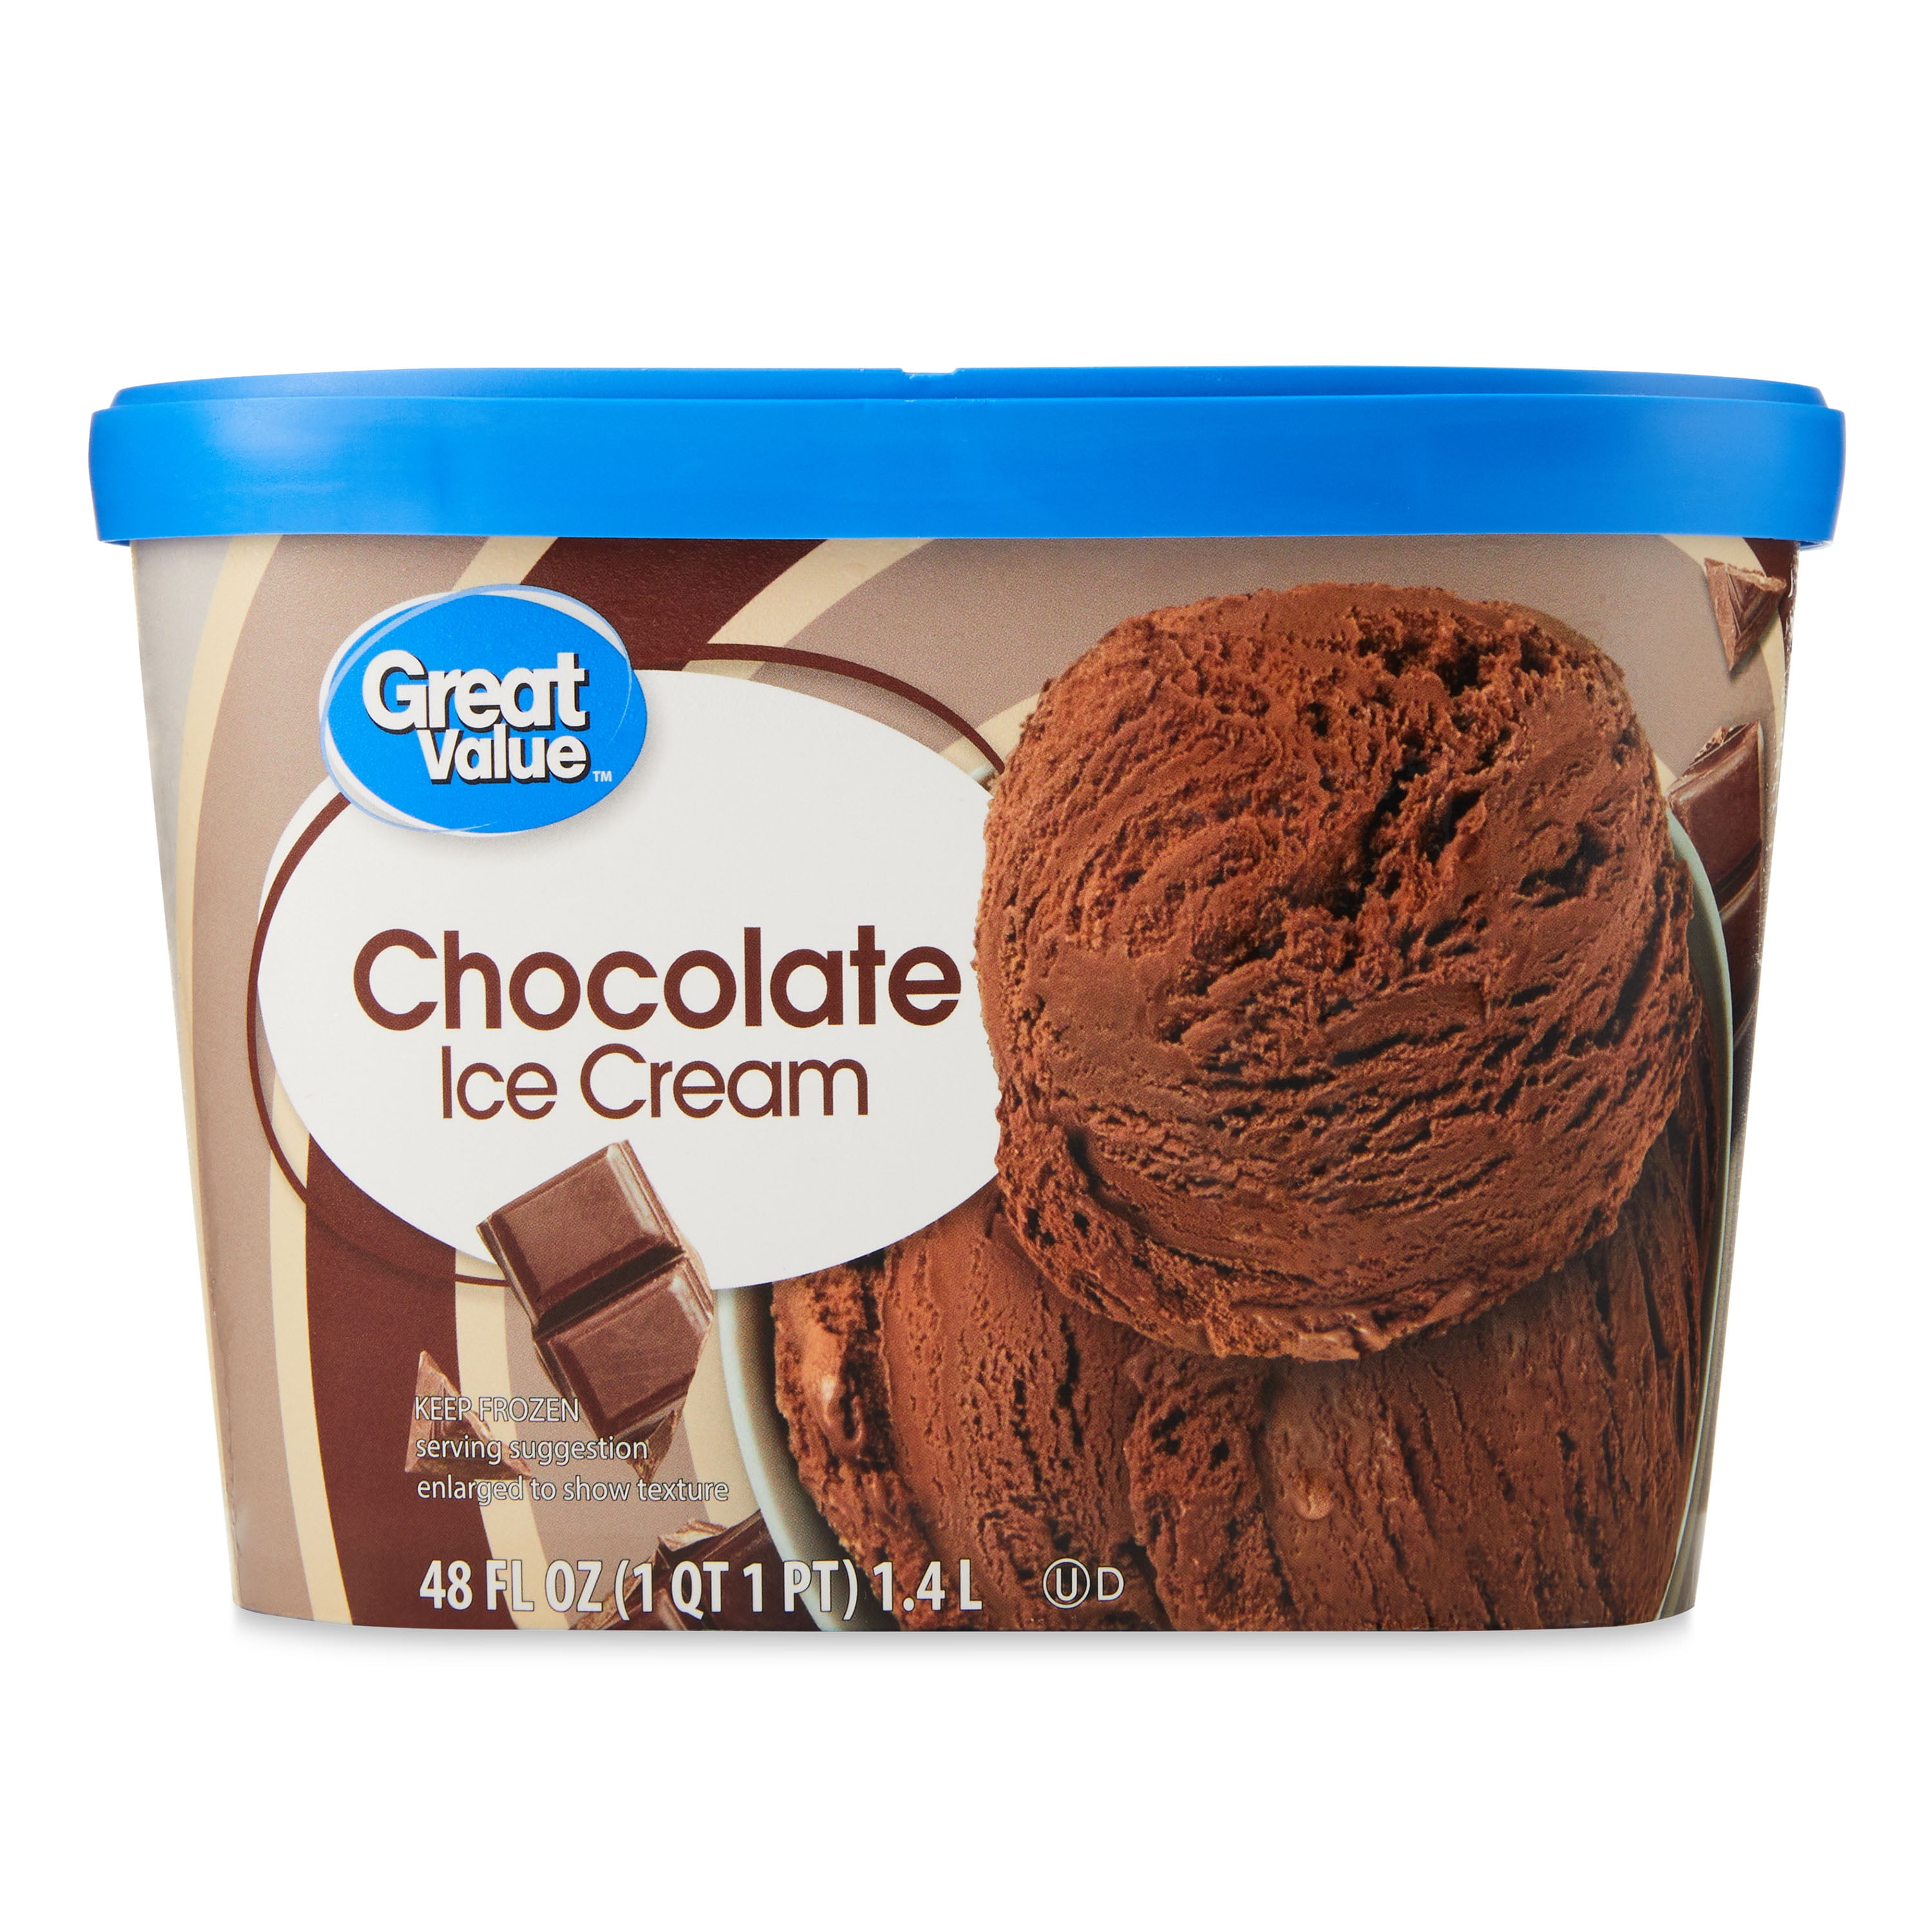 Great Value Chocolate Ice Cream, 48 fl oz